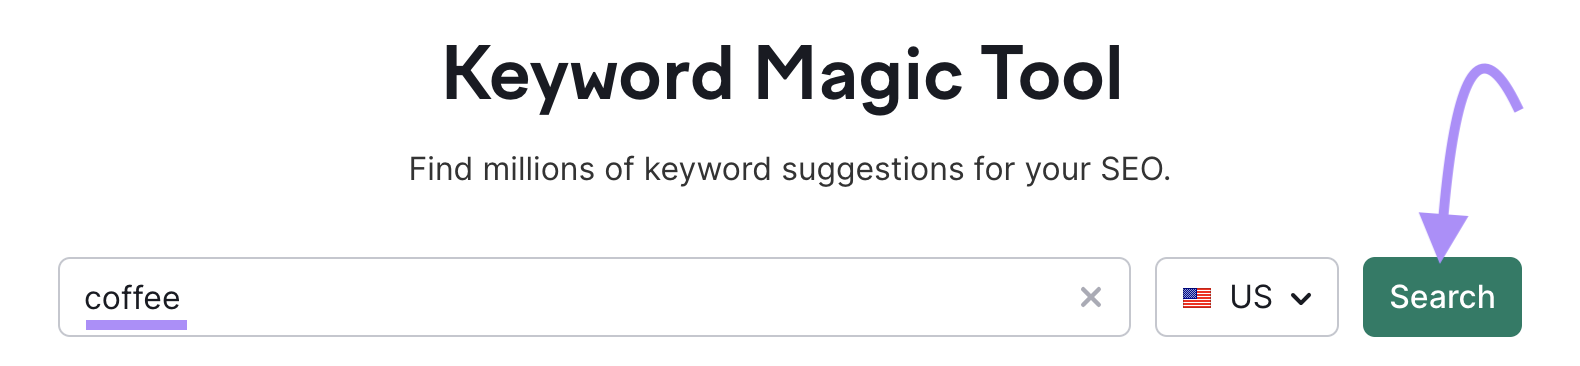 "coffee" entered into Keyword Magic Tool search bar